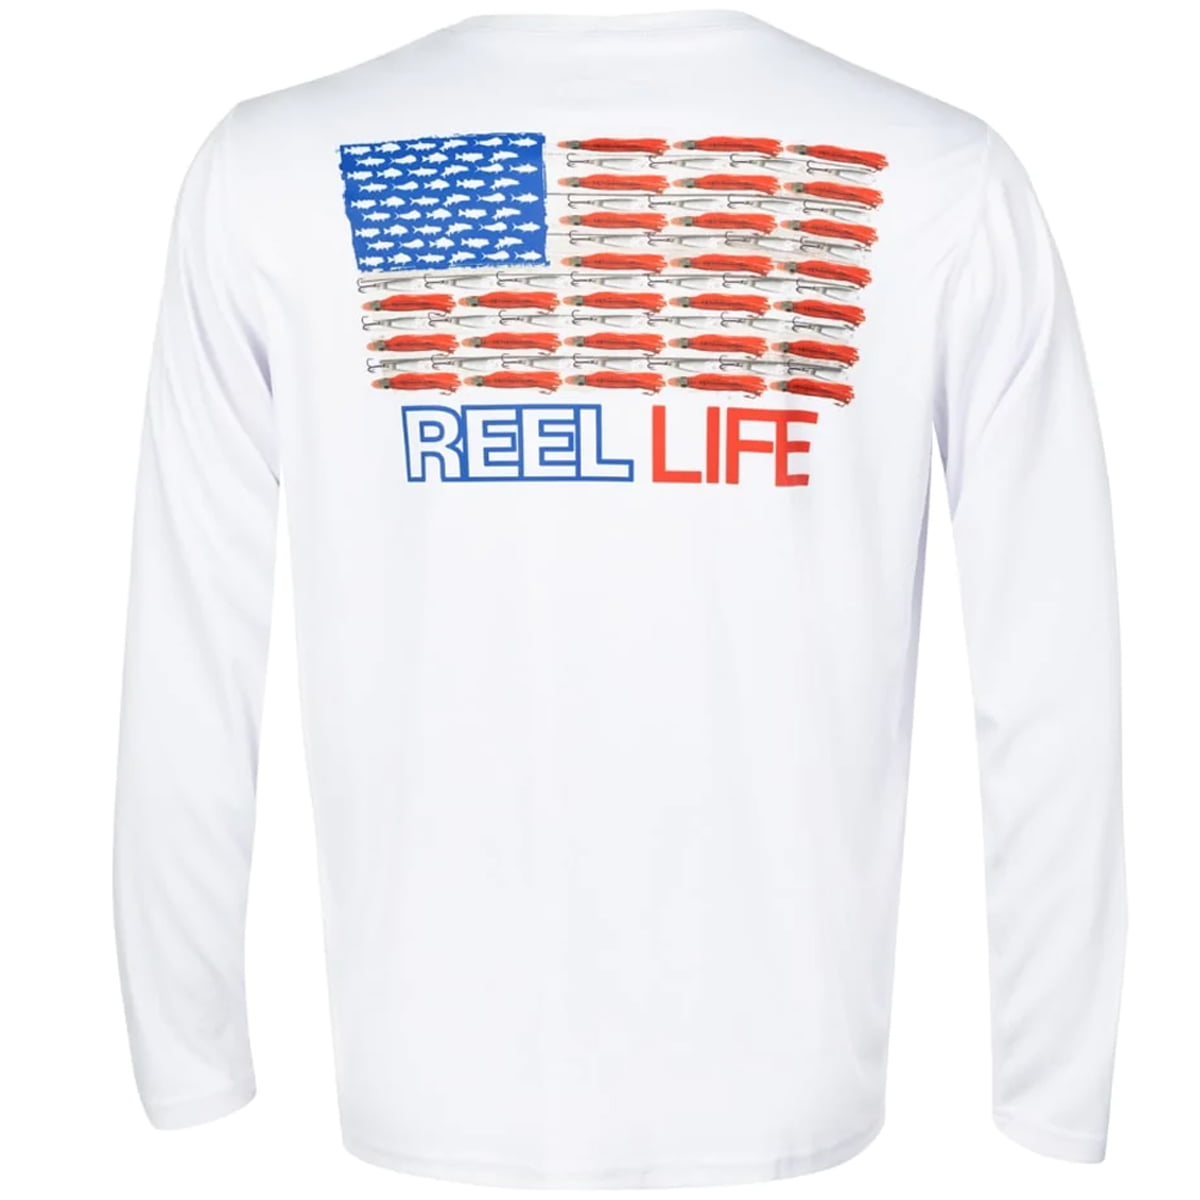 Reel Life Merica UV Long Sleeve Performance T-Shirt - Medium - White